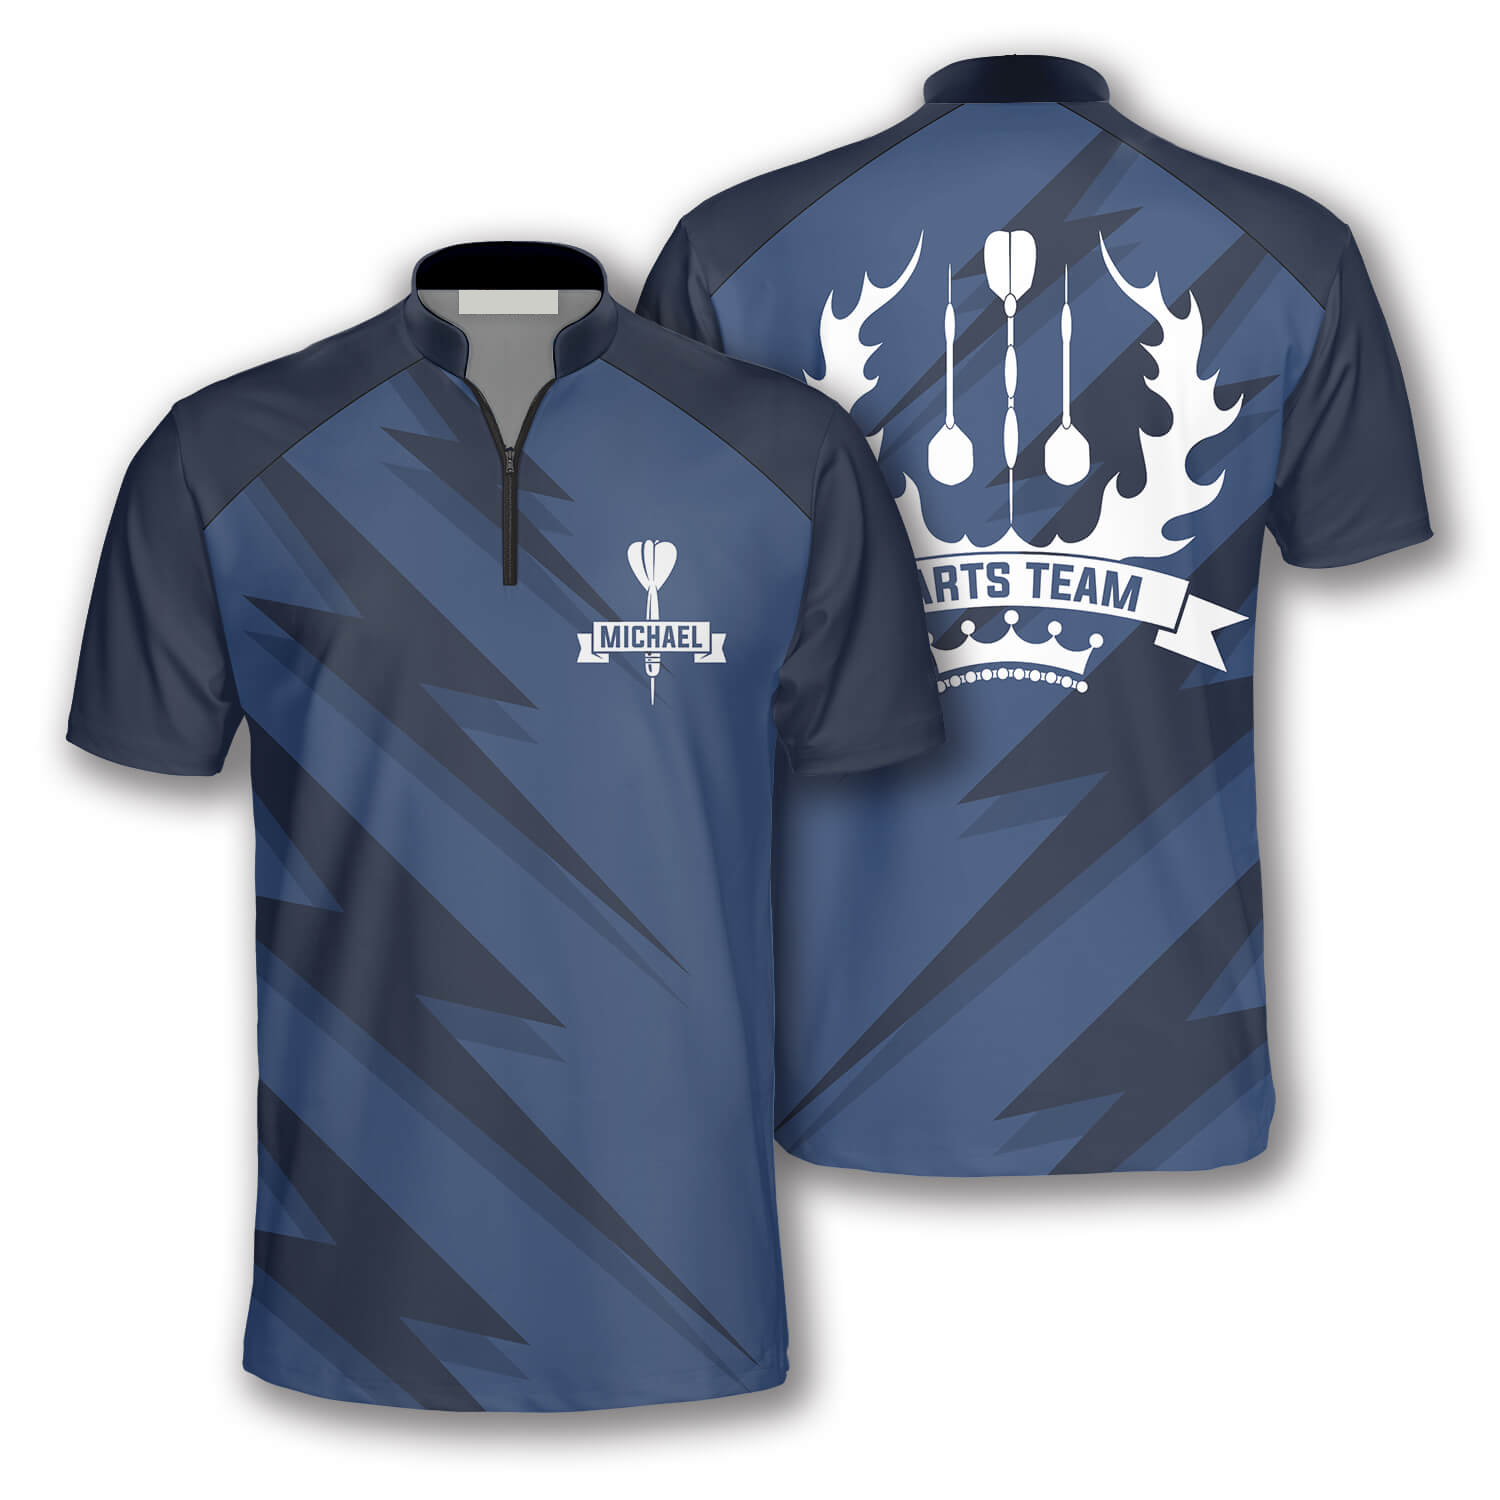 Personalized Name Team Blue Lightning Custom Darts Jerseys For Men/ Idea Gift for Dart Team